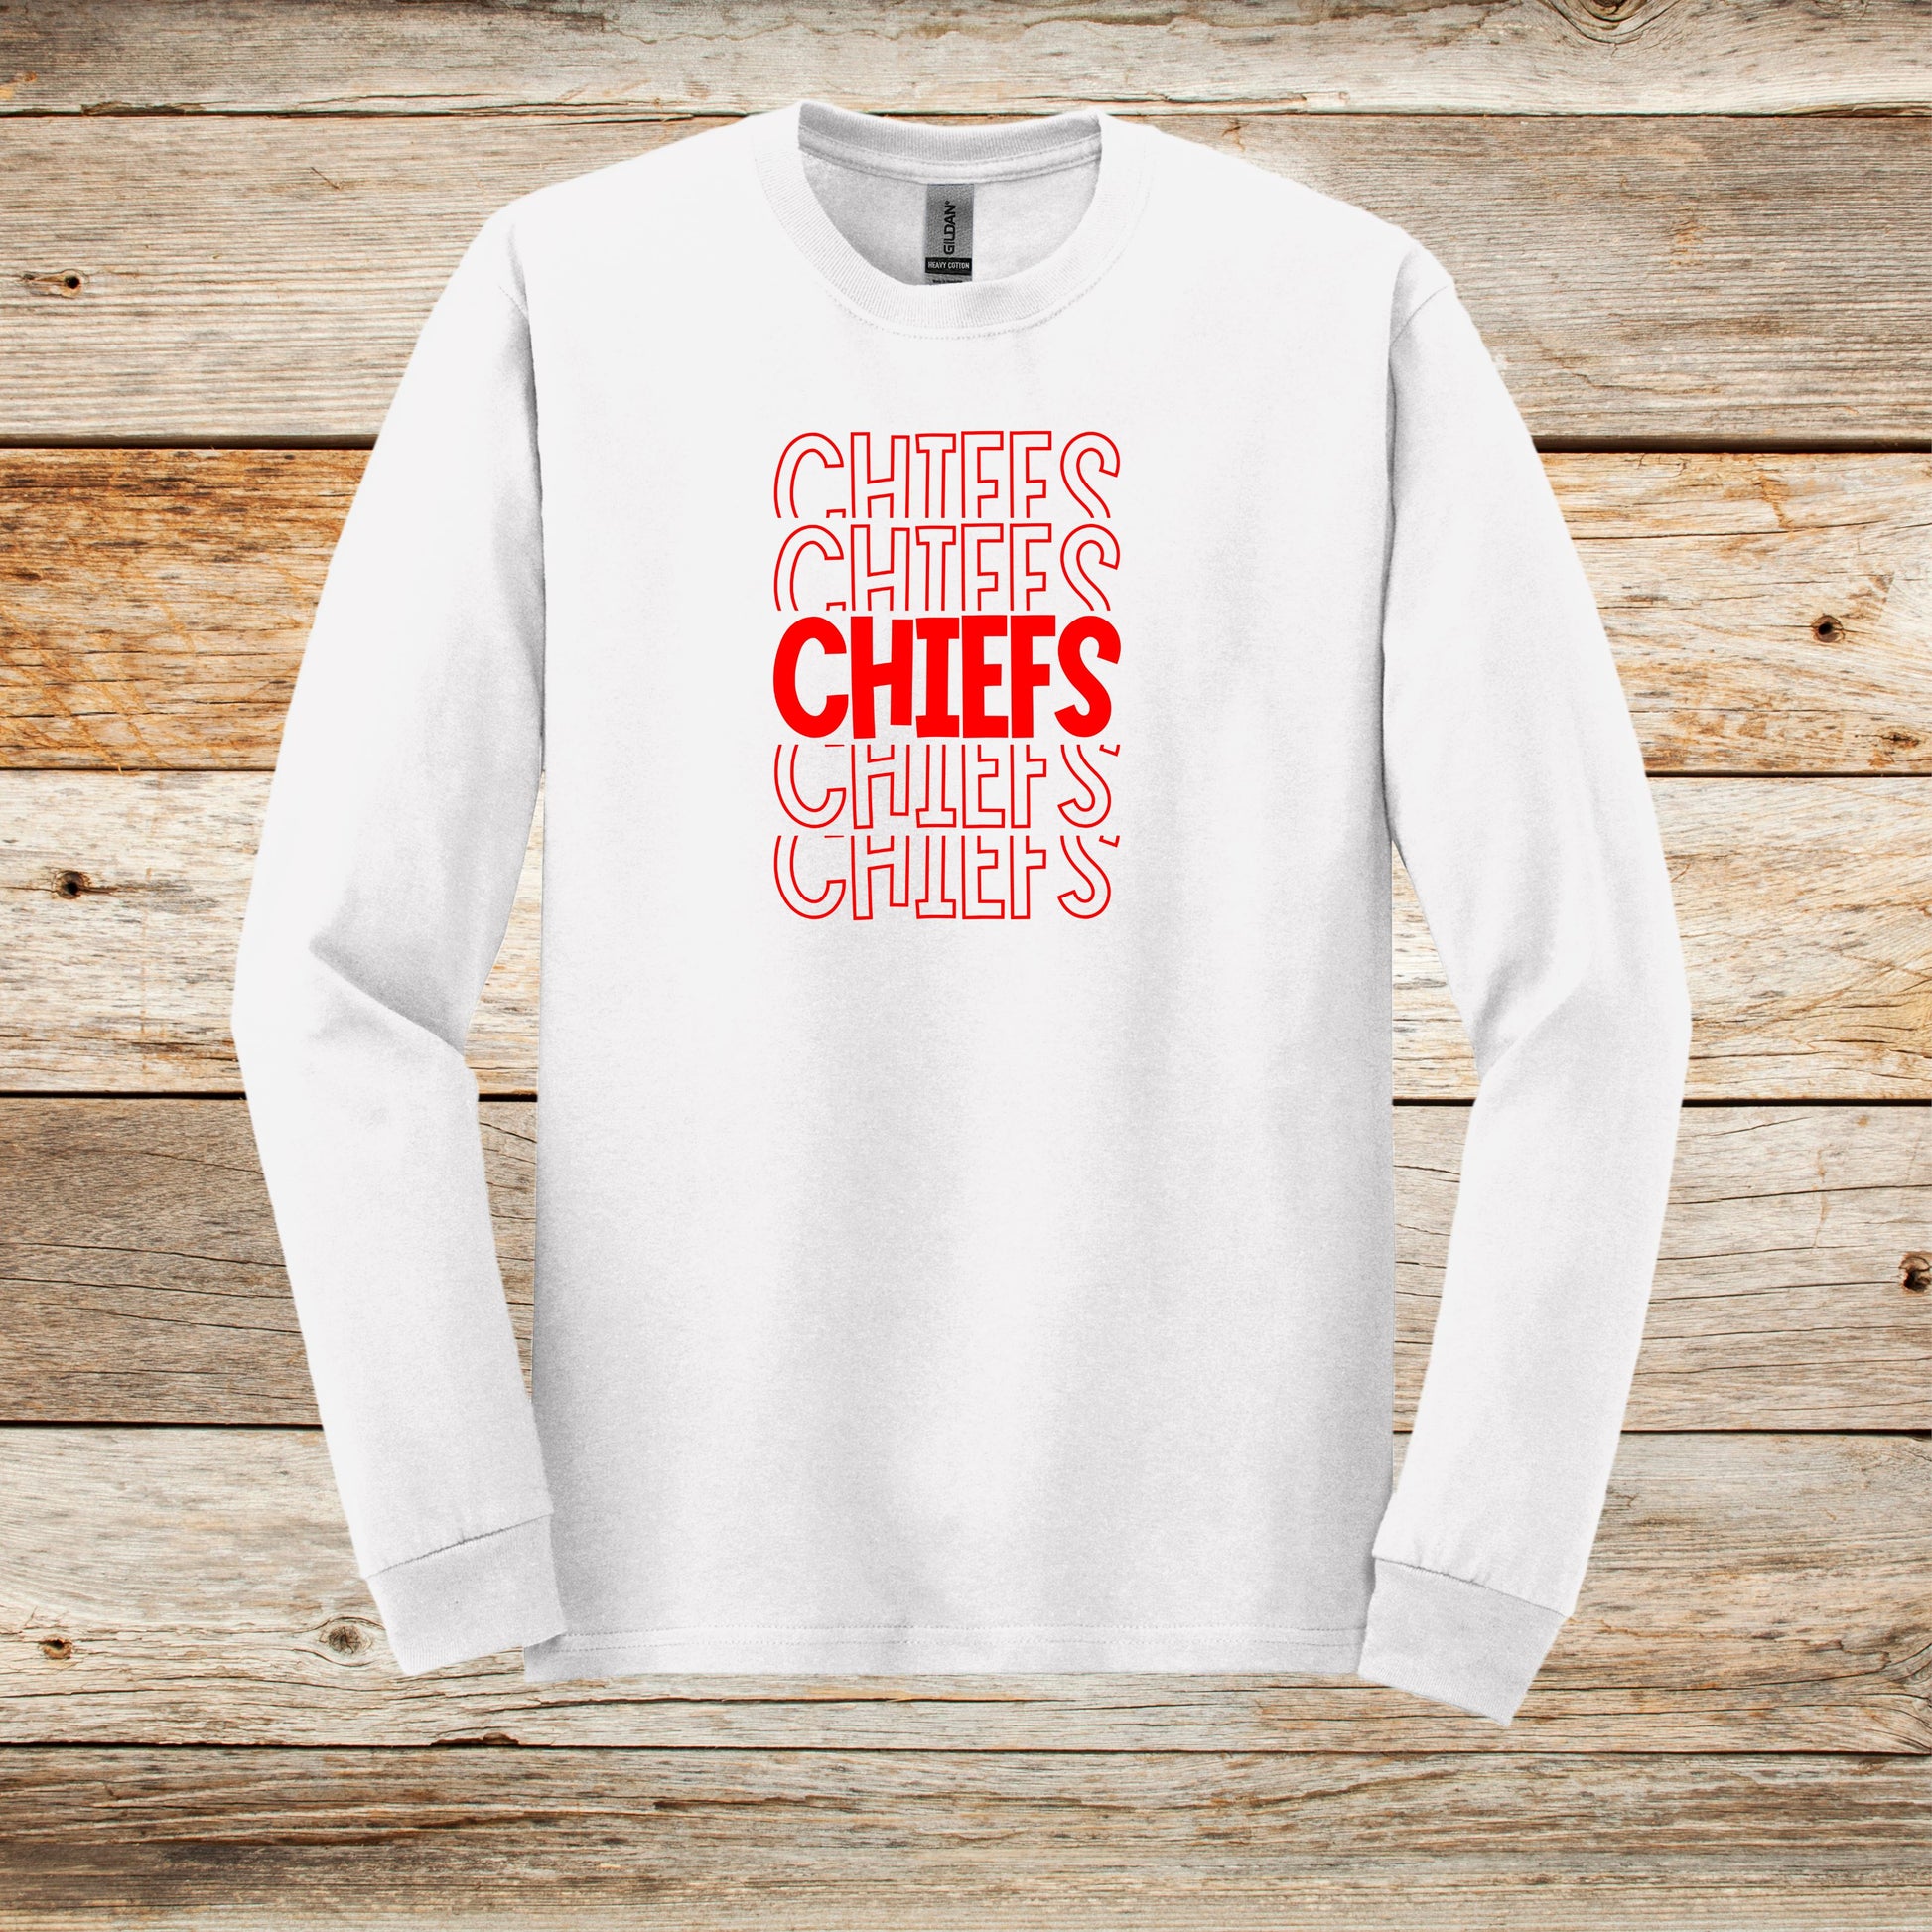 Football Long Sleeve T-Shirt - Chiefs Football - Chiefs - Adult and Children's Tee Shirts - Sports Long Sleeve T-Shirts Graphic Avenue White Adult Small 